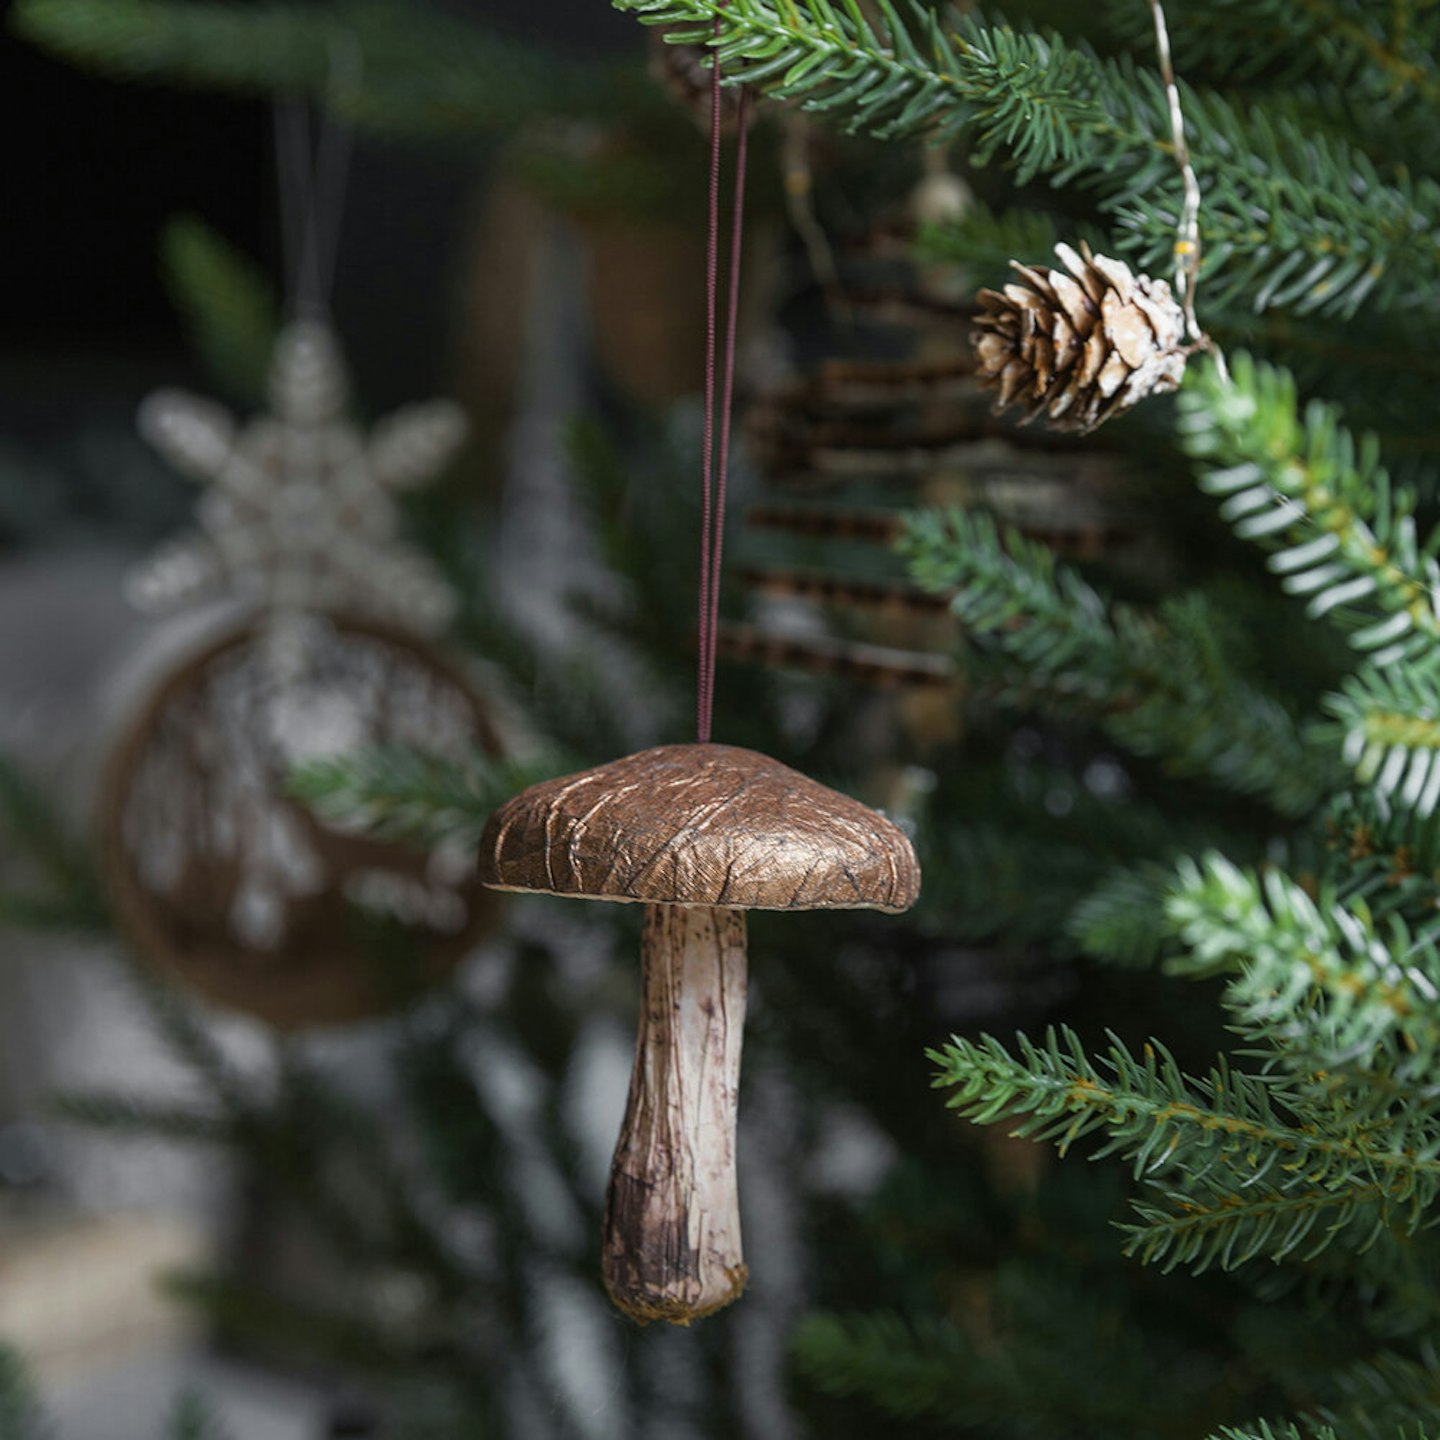 Christmas 2020: Christmas Tree Decorations Trends - Nature/Woodland